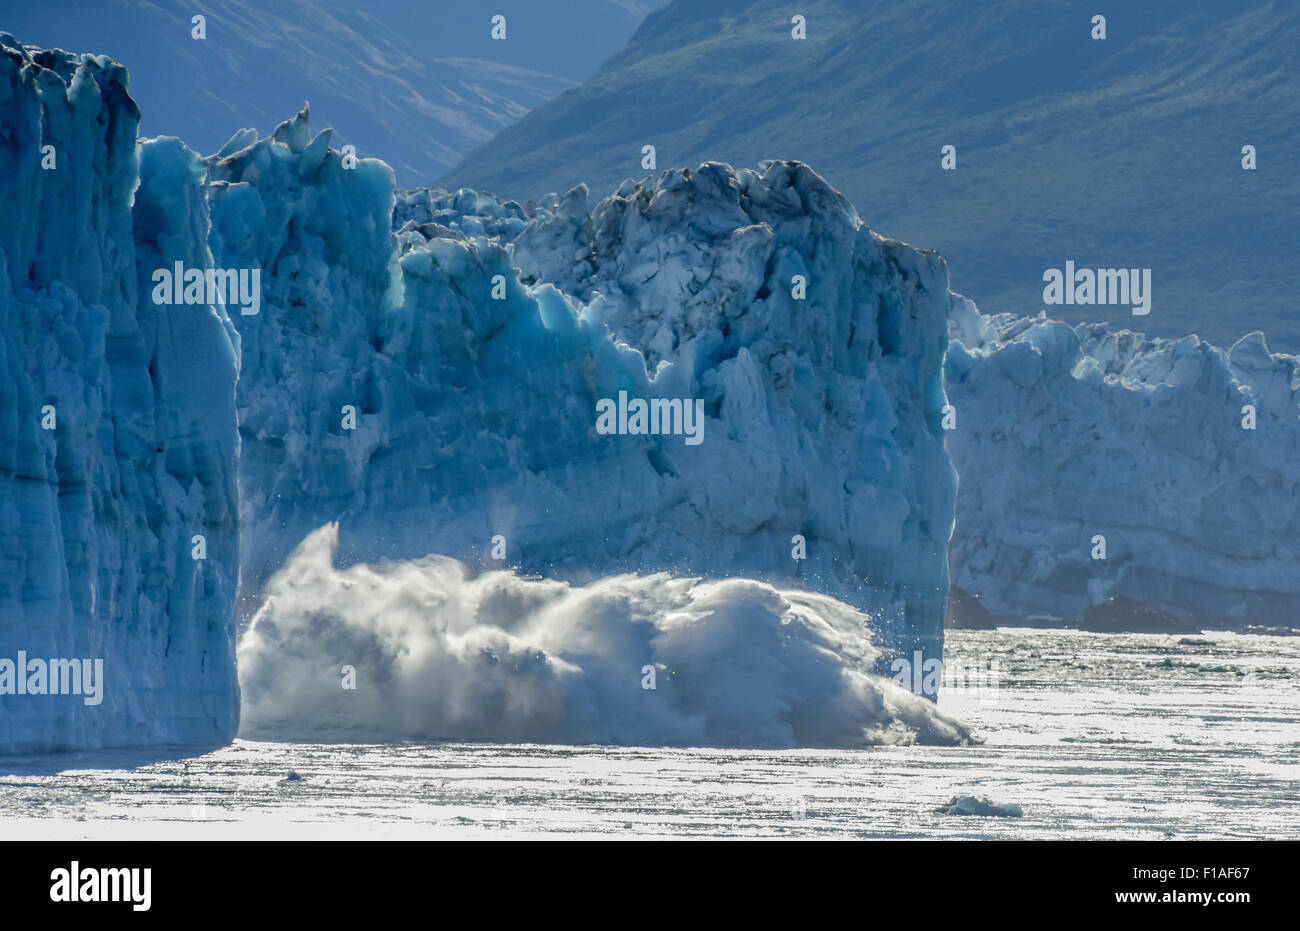 Alaska-Kreuzfahrt - kalbender Gletscher - Hubbard - globale Erwärmung & Klimawandel - ein schmelzender Eisberg - St. Elias Alaska - Yukon, Kanada Stockfoto